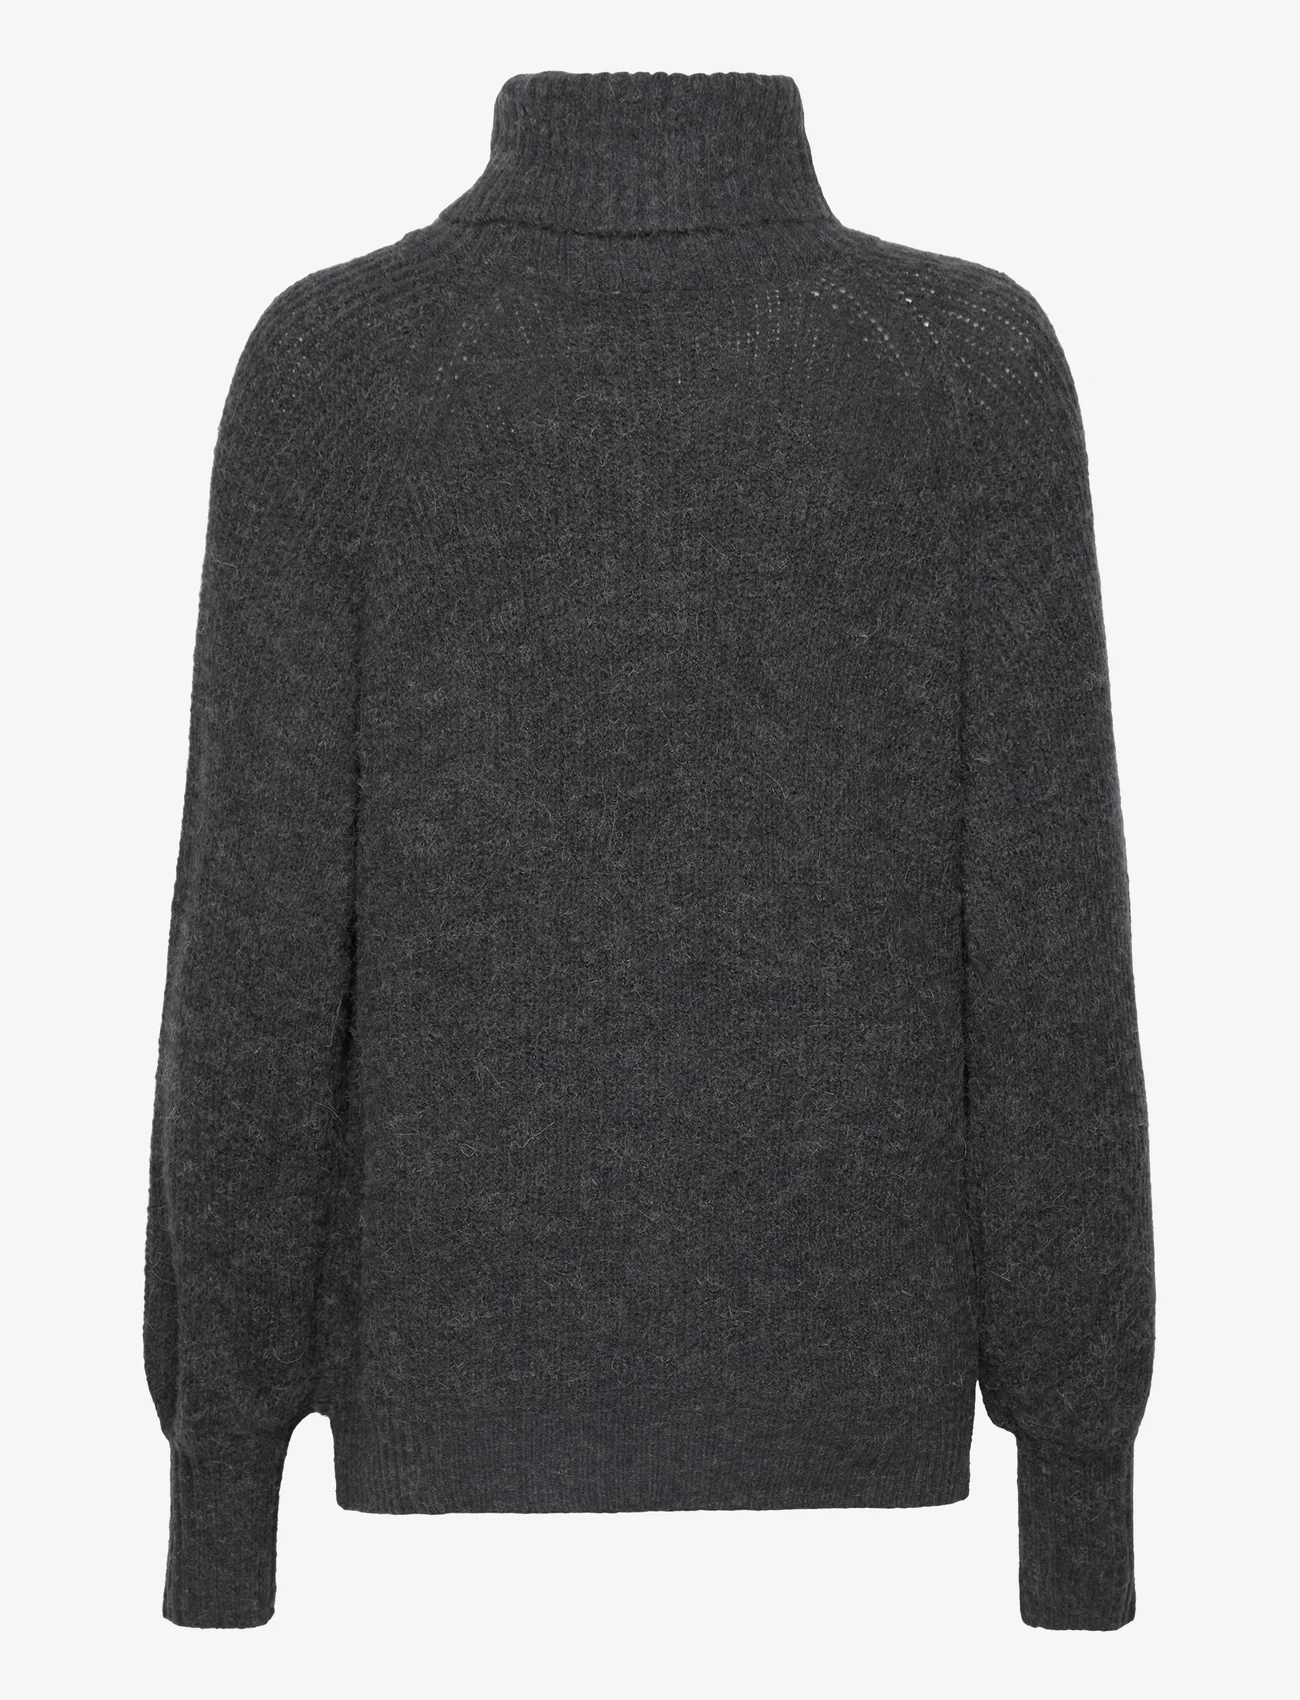 FREE/QUENT - FQSILA-PU - megztiniai su aukšta apykakle - dark grey melange - 1